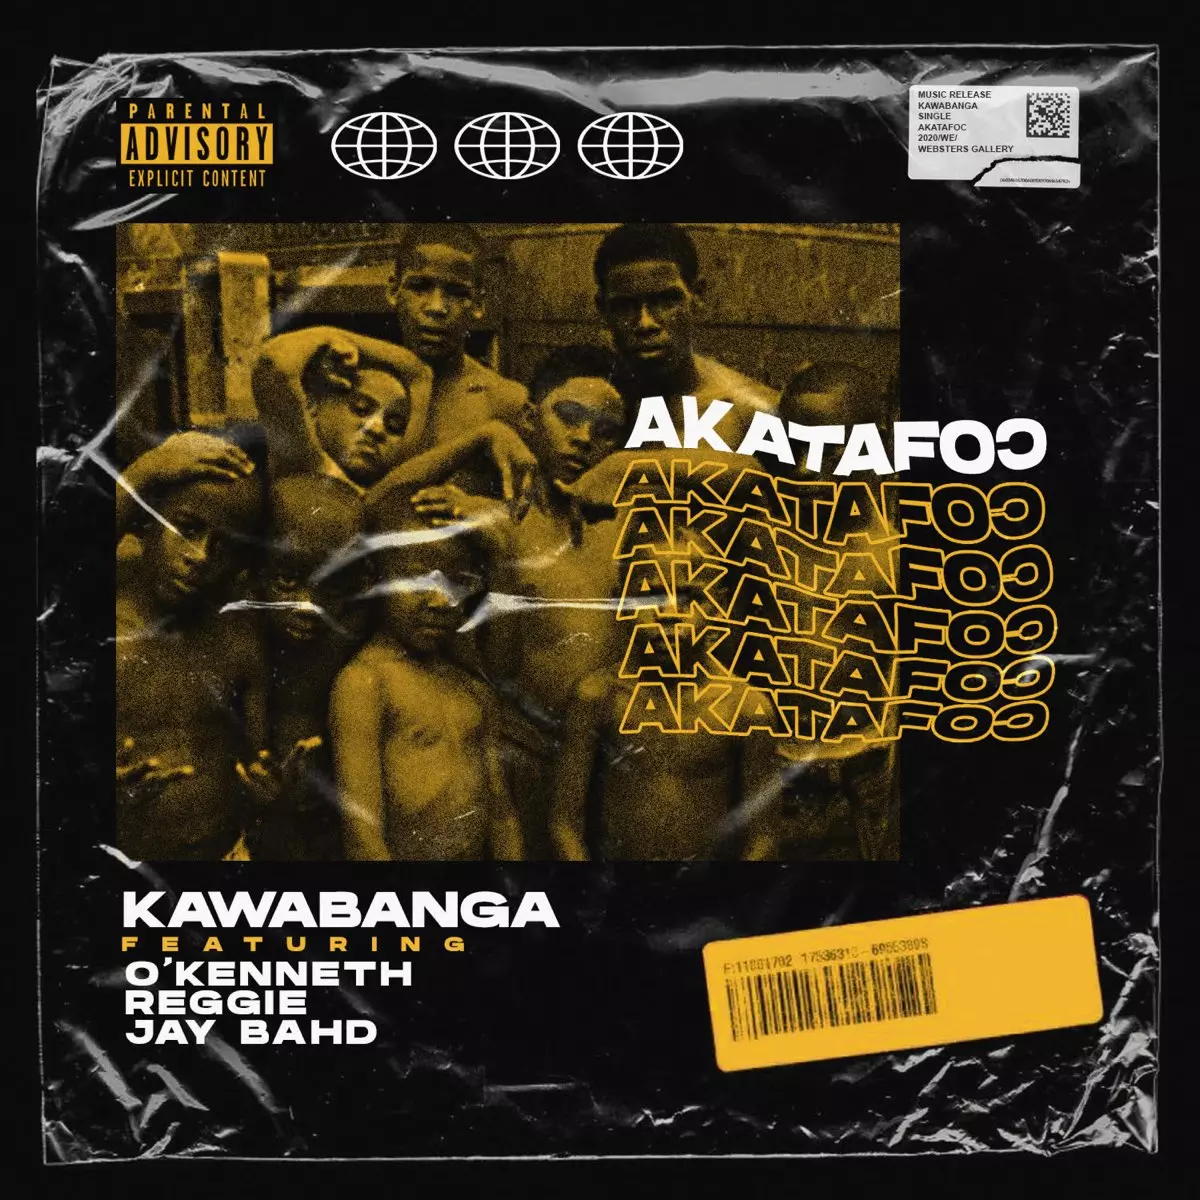 Akatafoc (feat. O'kenneth, Reggie & Jay Bahd) - Single by Kawabanga on Apple Music